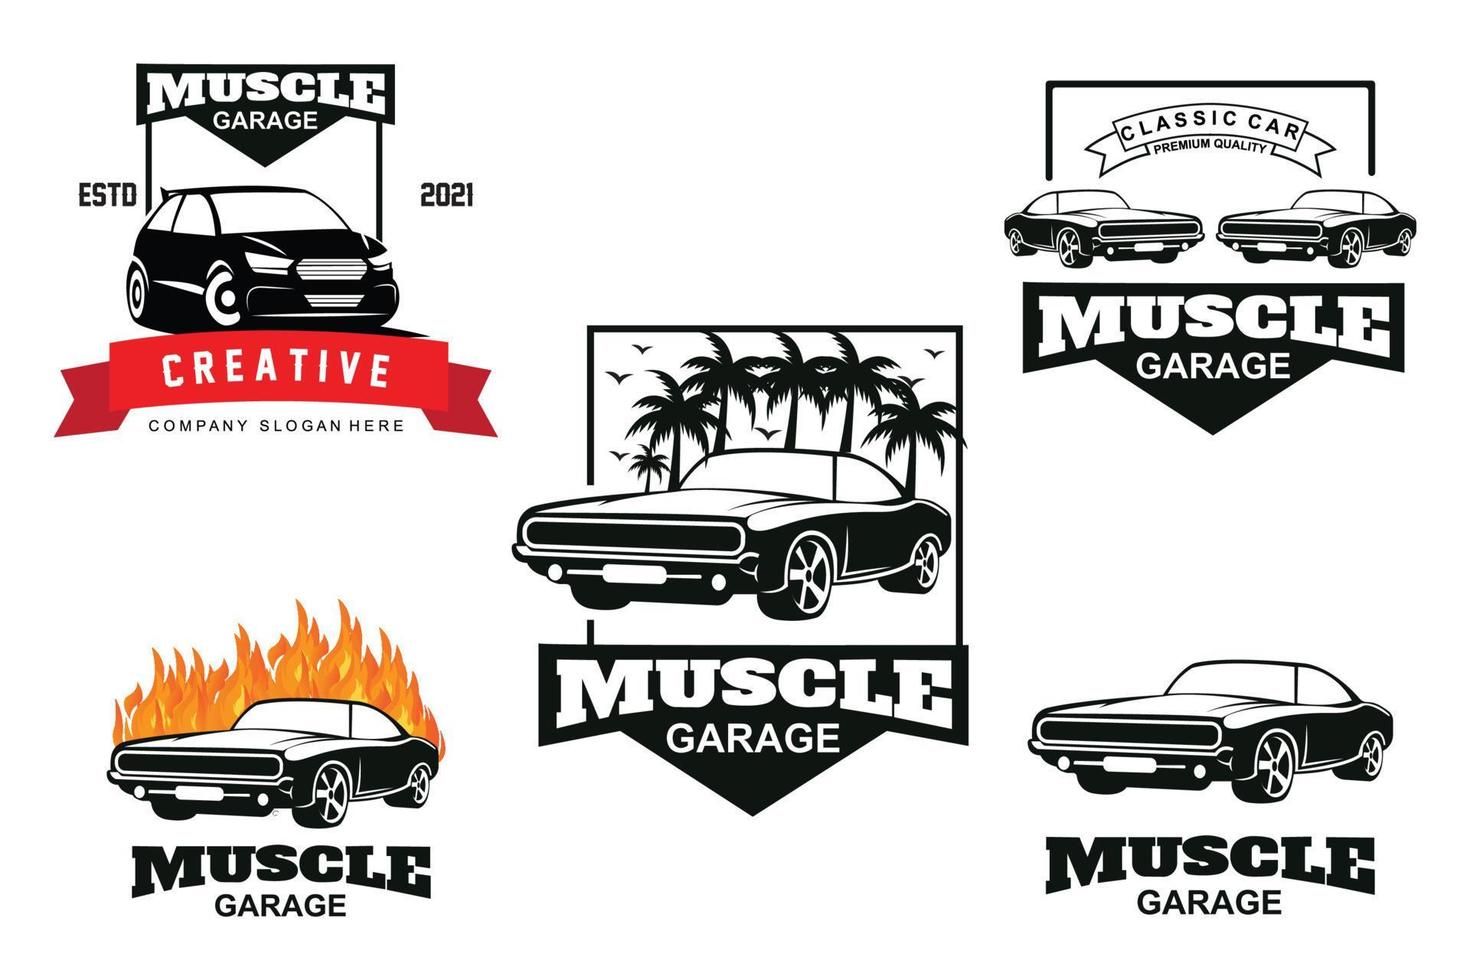 amerikanisches klassisches auto-logo-bündel-set-design, muskelautomobil-fahrzeugillustration vektor